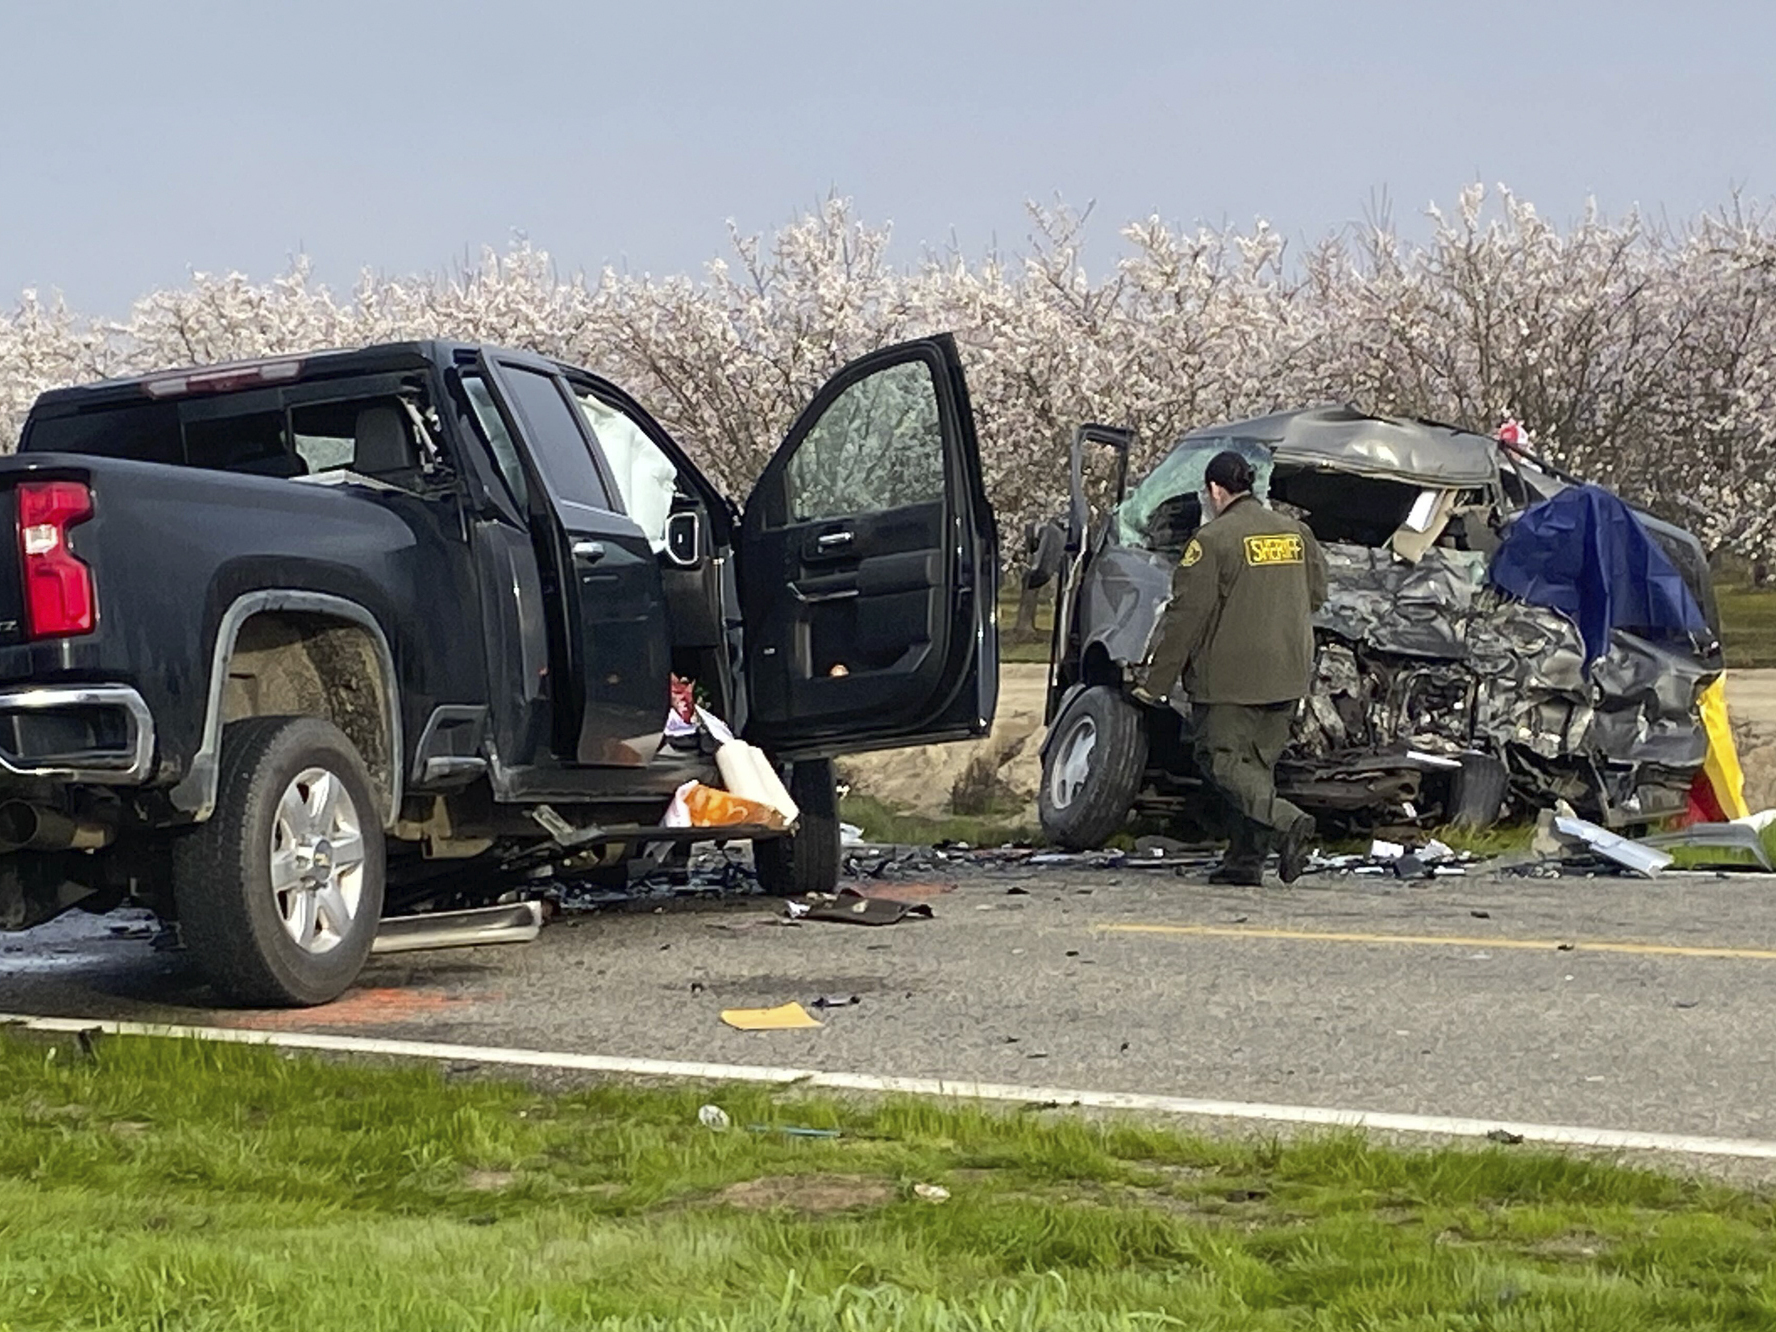 8 people killed in a head-on crash in central California farming region